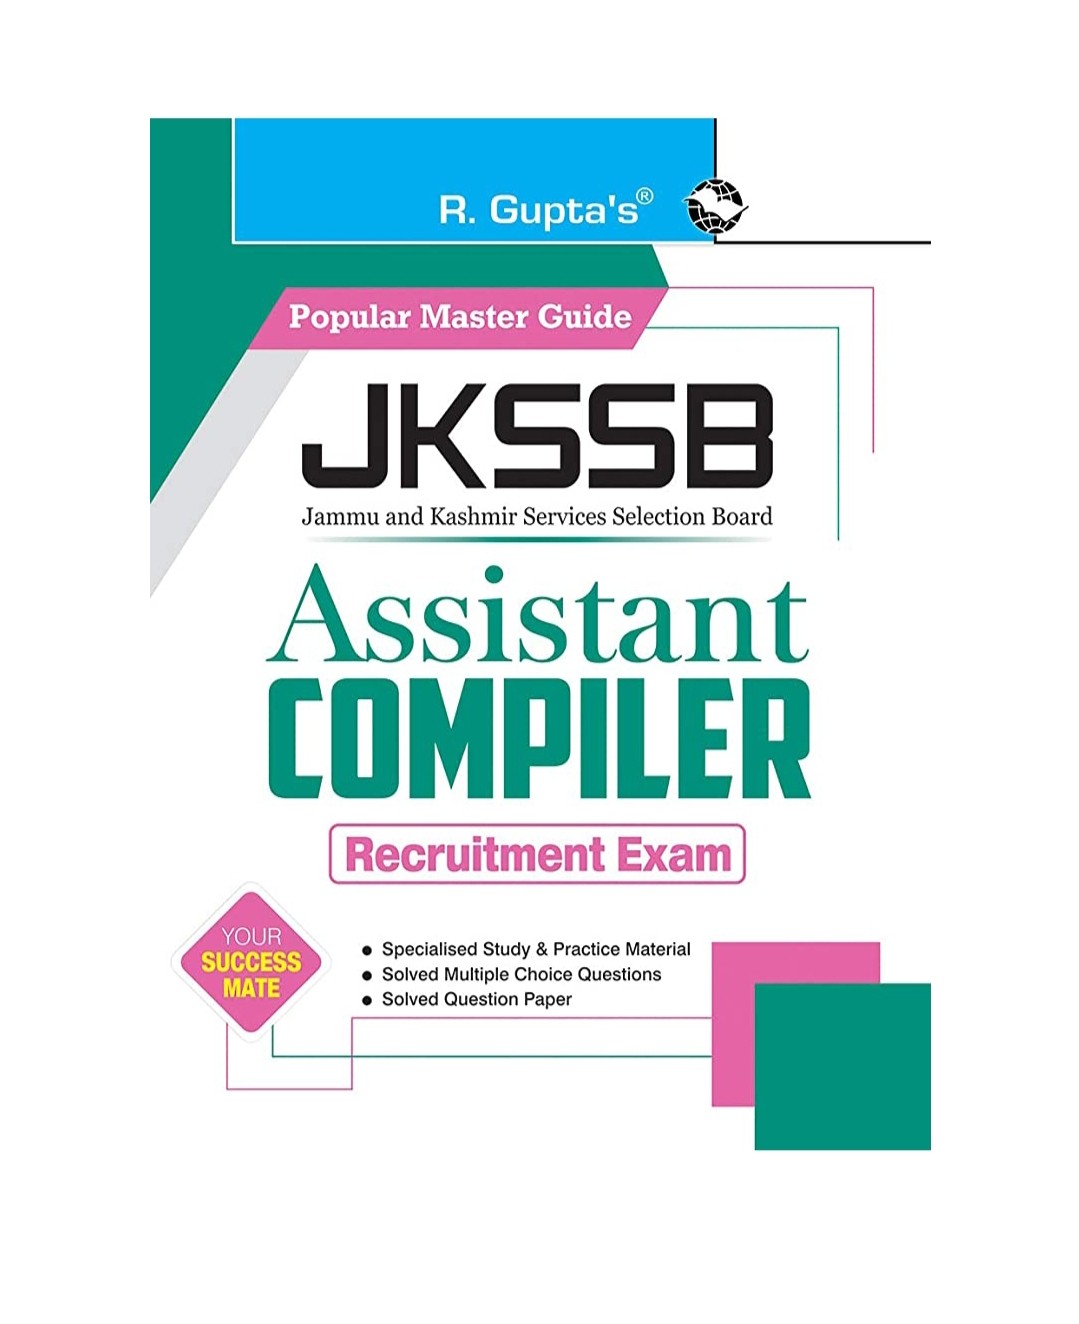 JKSSB Assistant Compiler Recruitment Exam Guide foto foto